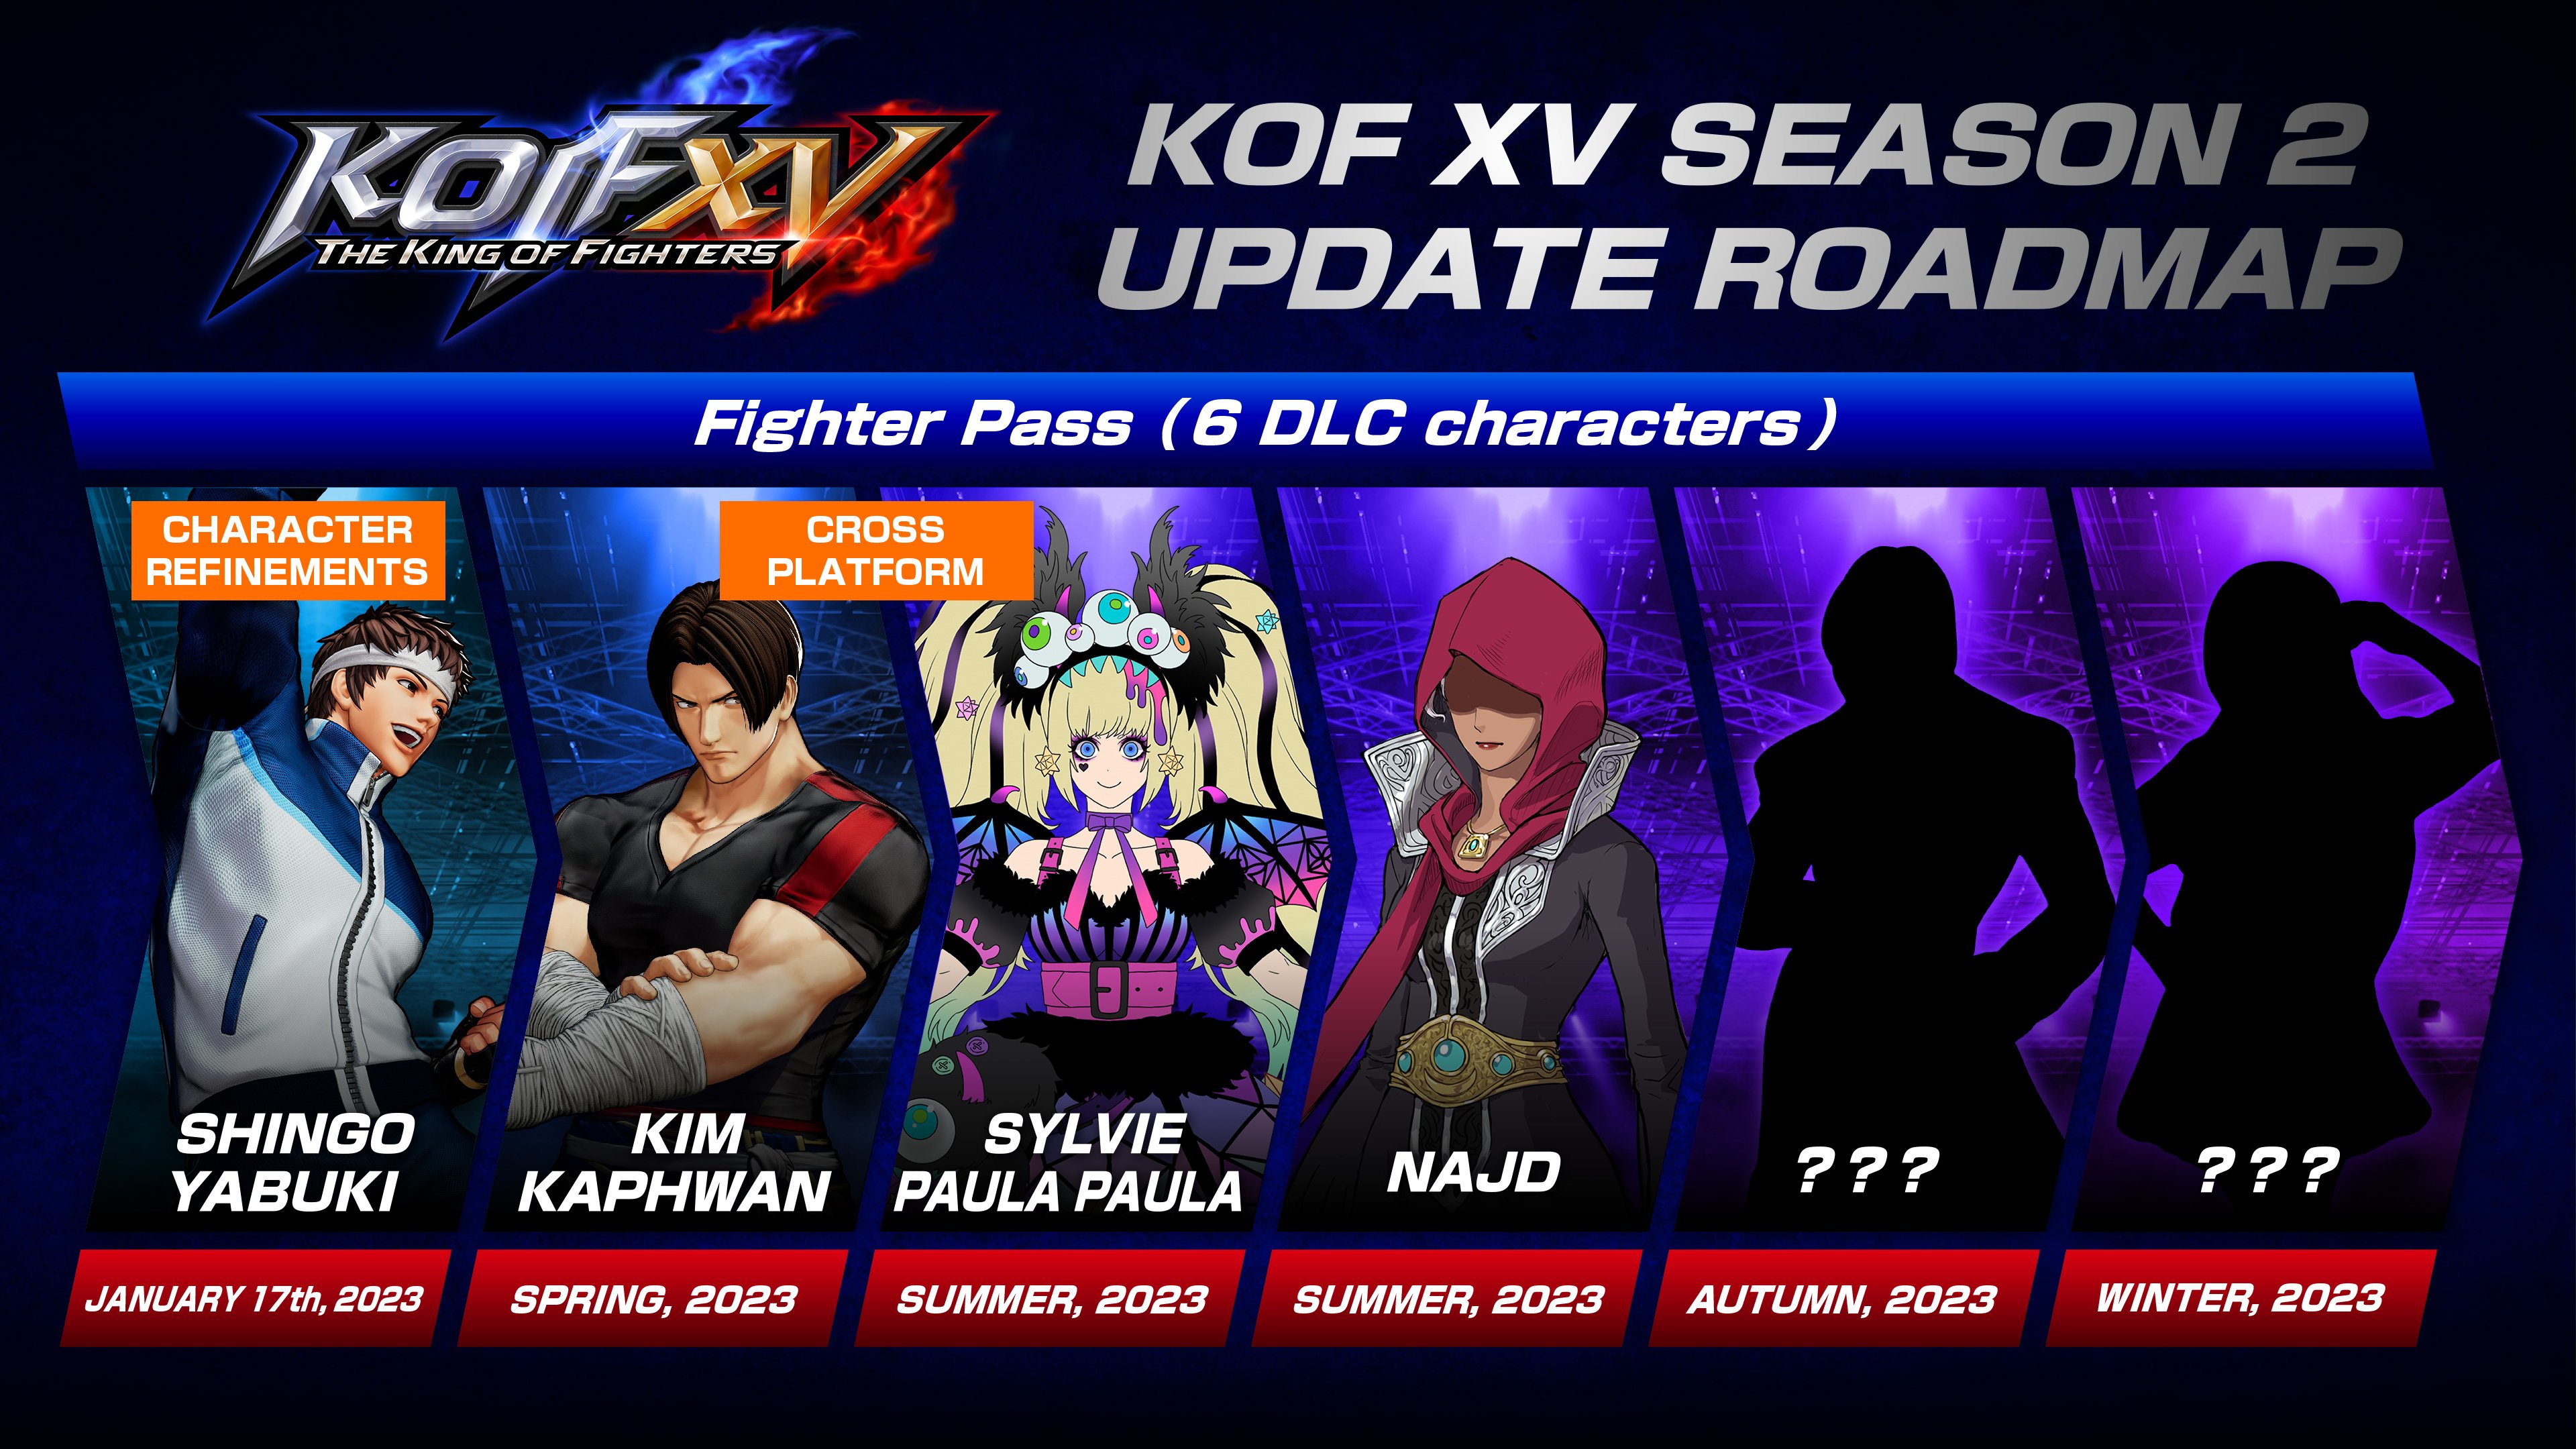 #
      The King of Fighters XV Season 2 DLC character Shingo Yabuki launches January 17; Sylvie Paula Paula and Najd announced